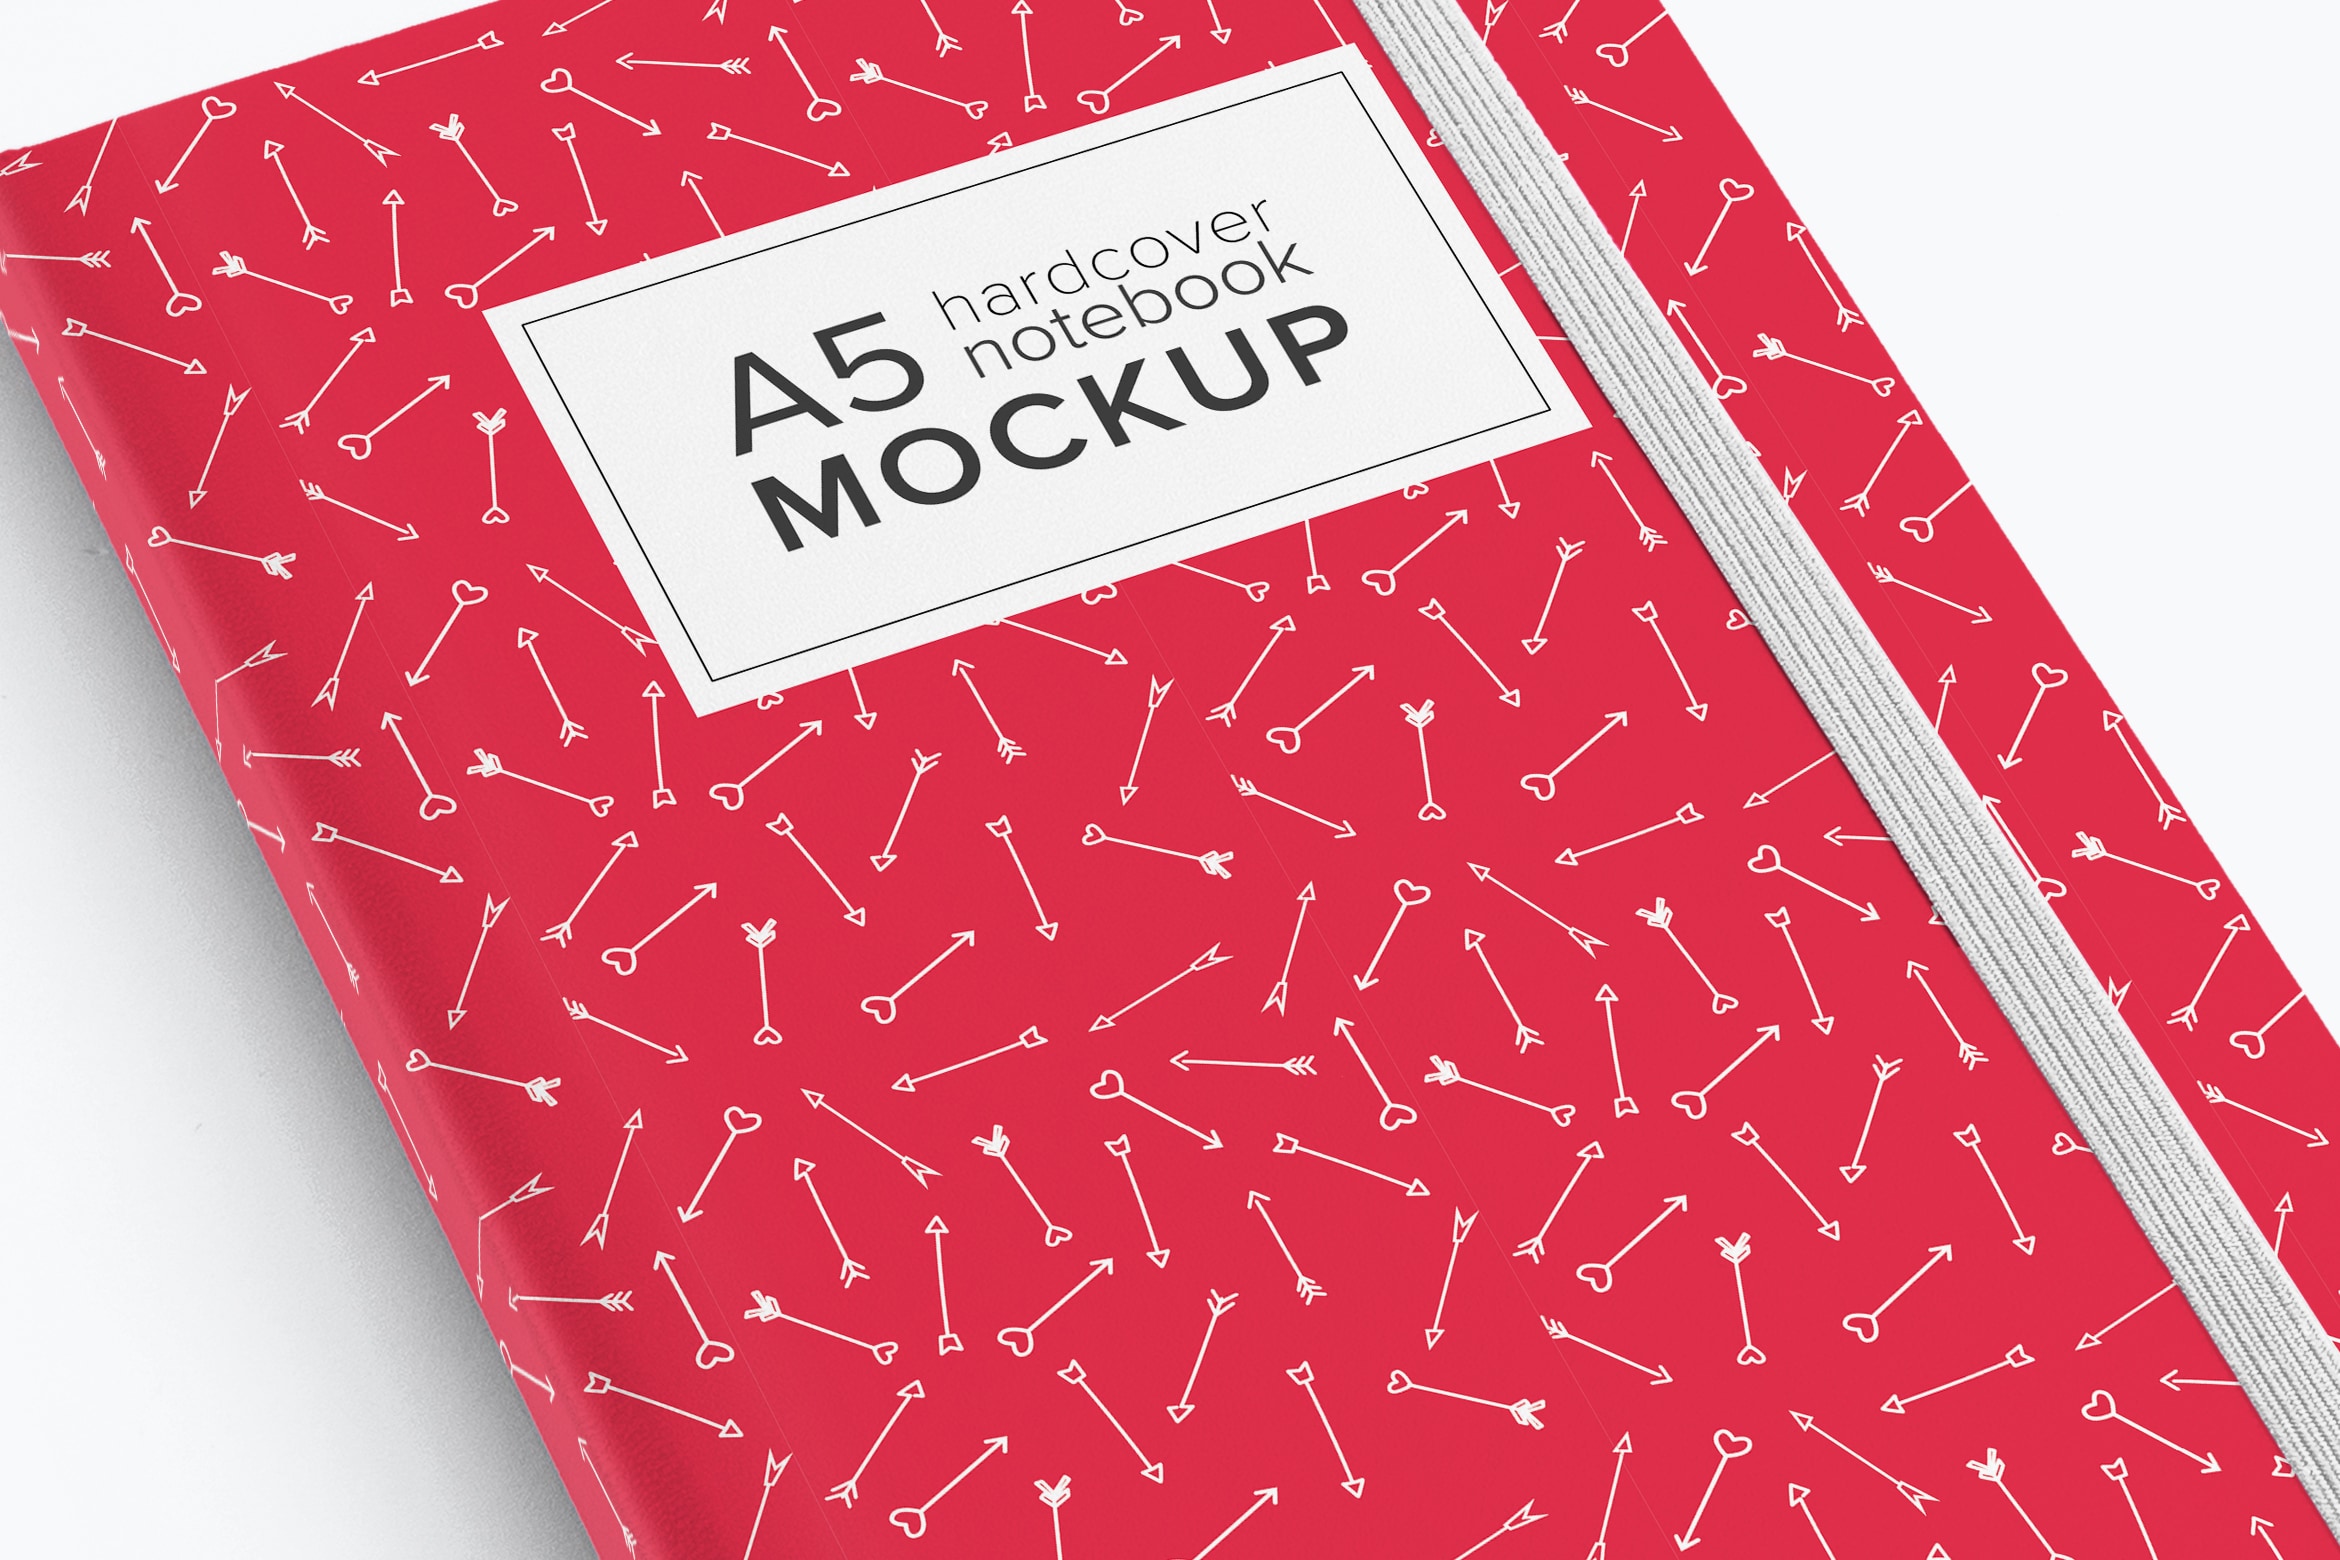 A5精装笔记本/记事本外观设计样机模板01 A5 Hardcover Notebook Mockup 01插图(2)